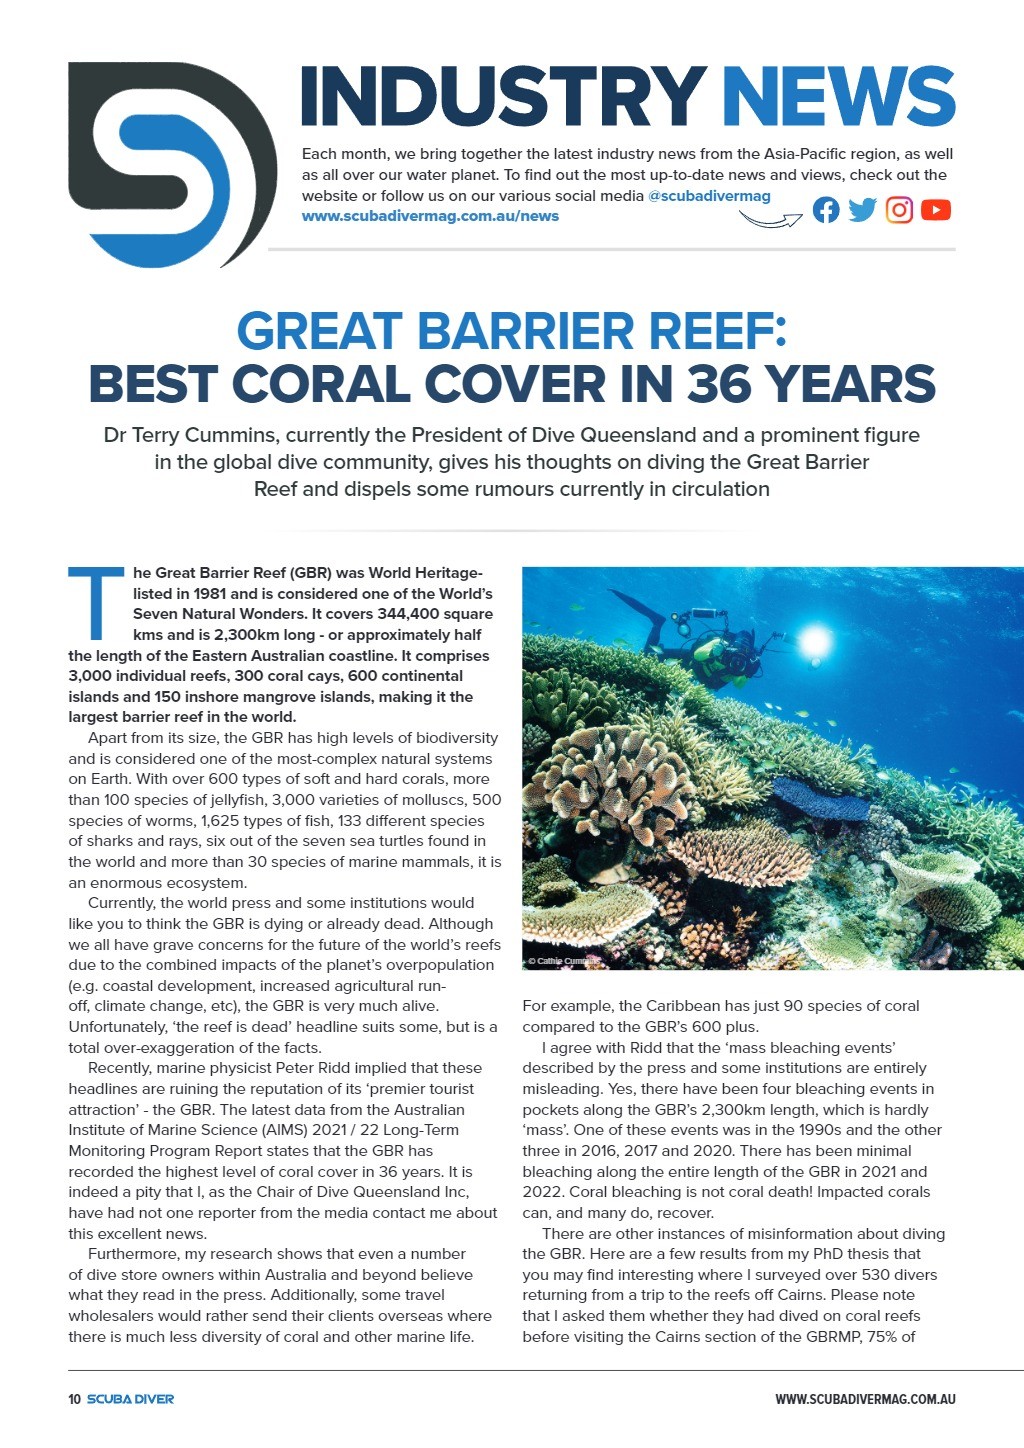 Scuba Diver - Industry News